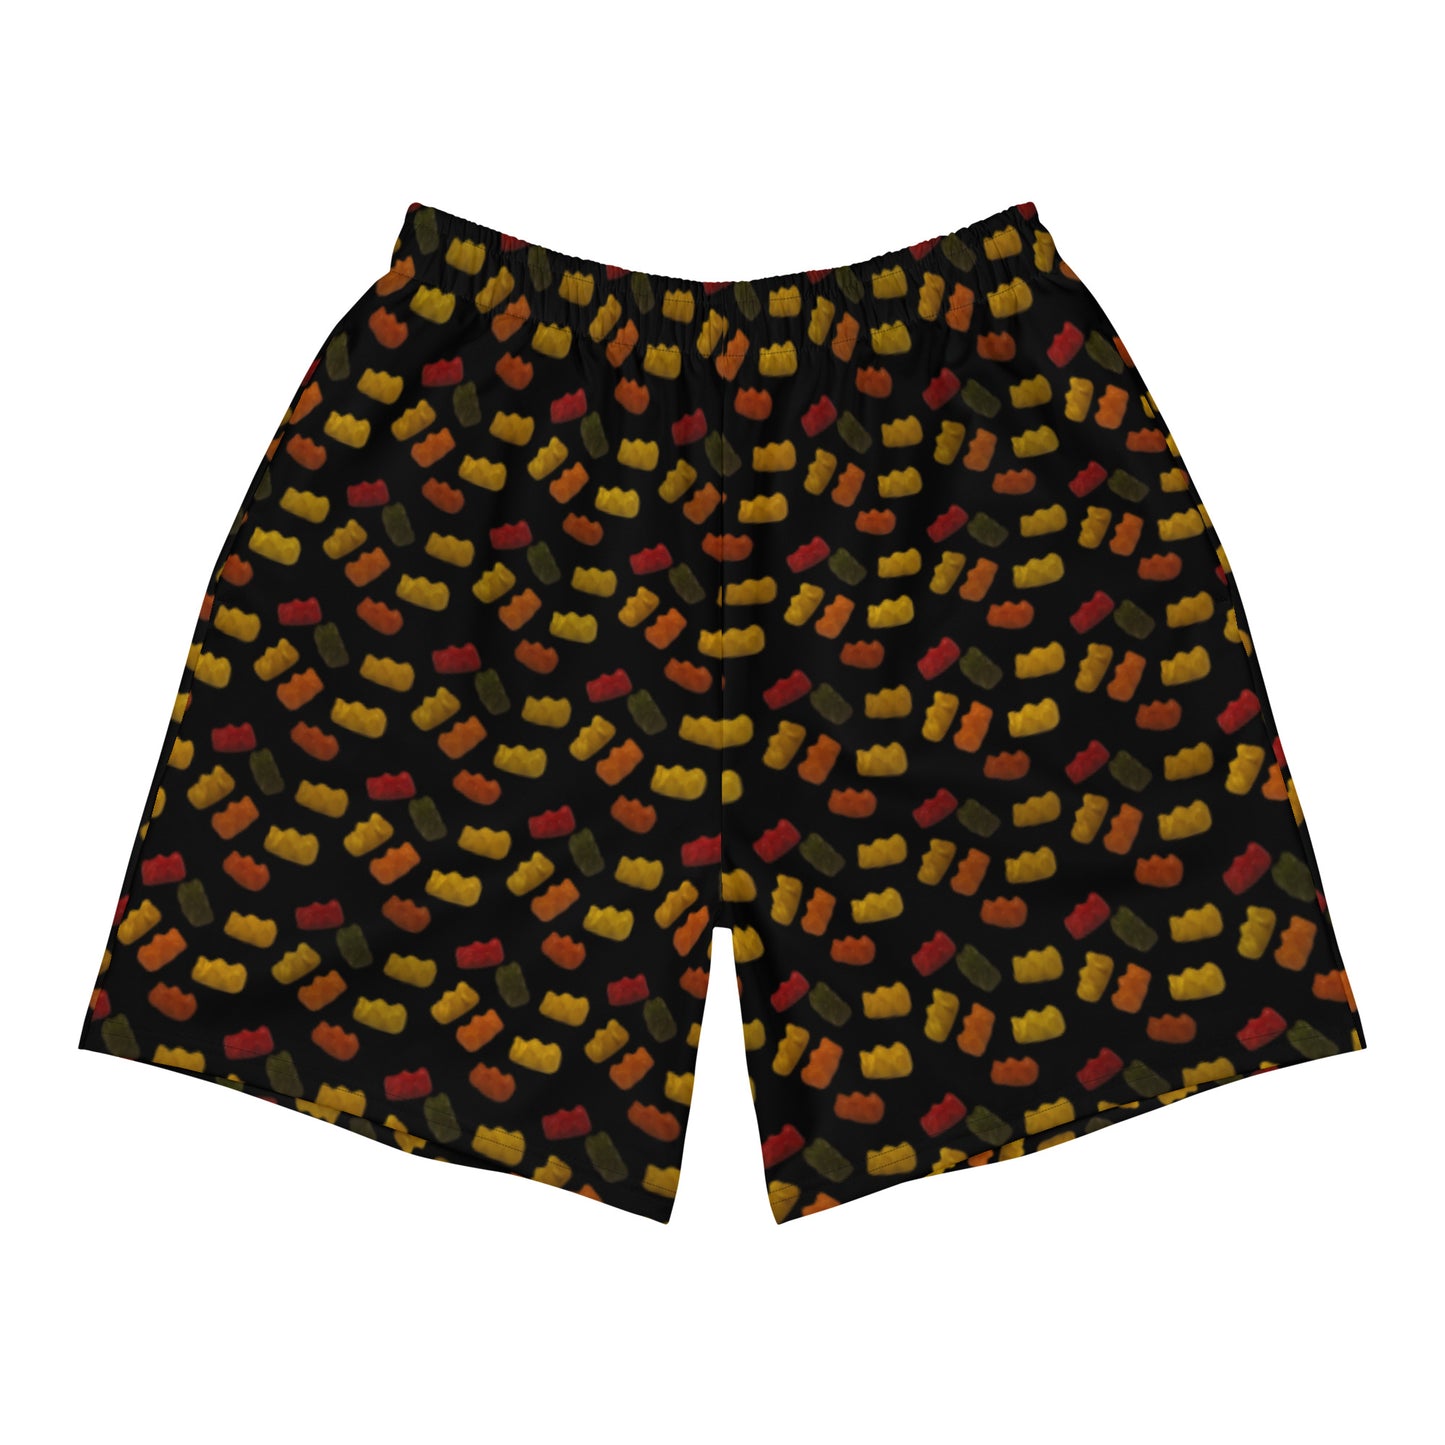 Gummy Bears - Men's Athletic Long Shorts - Black